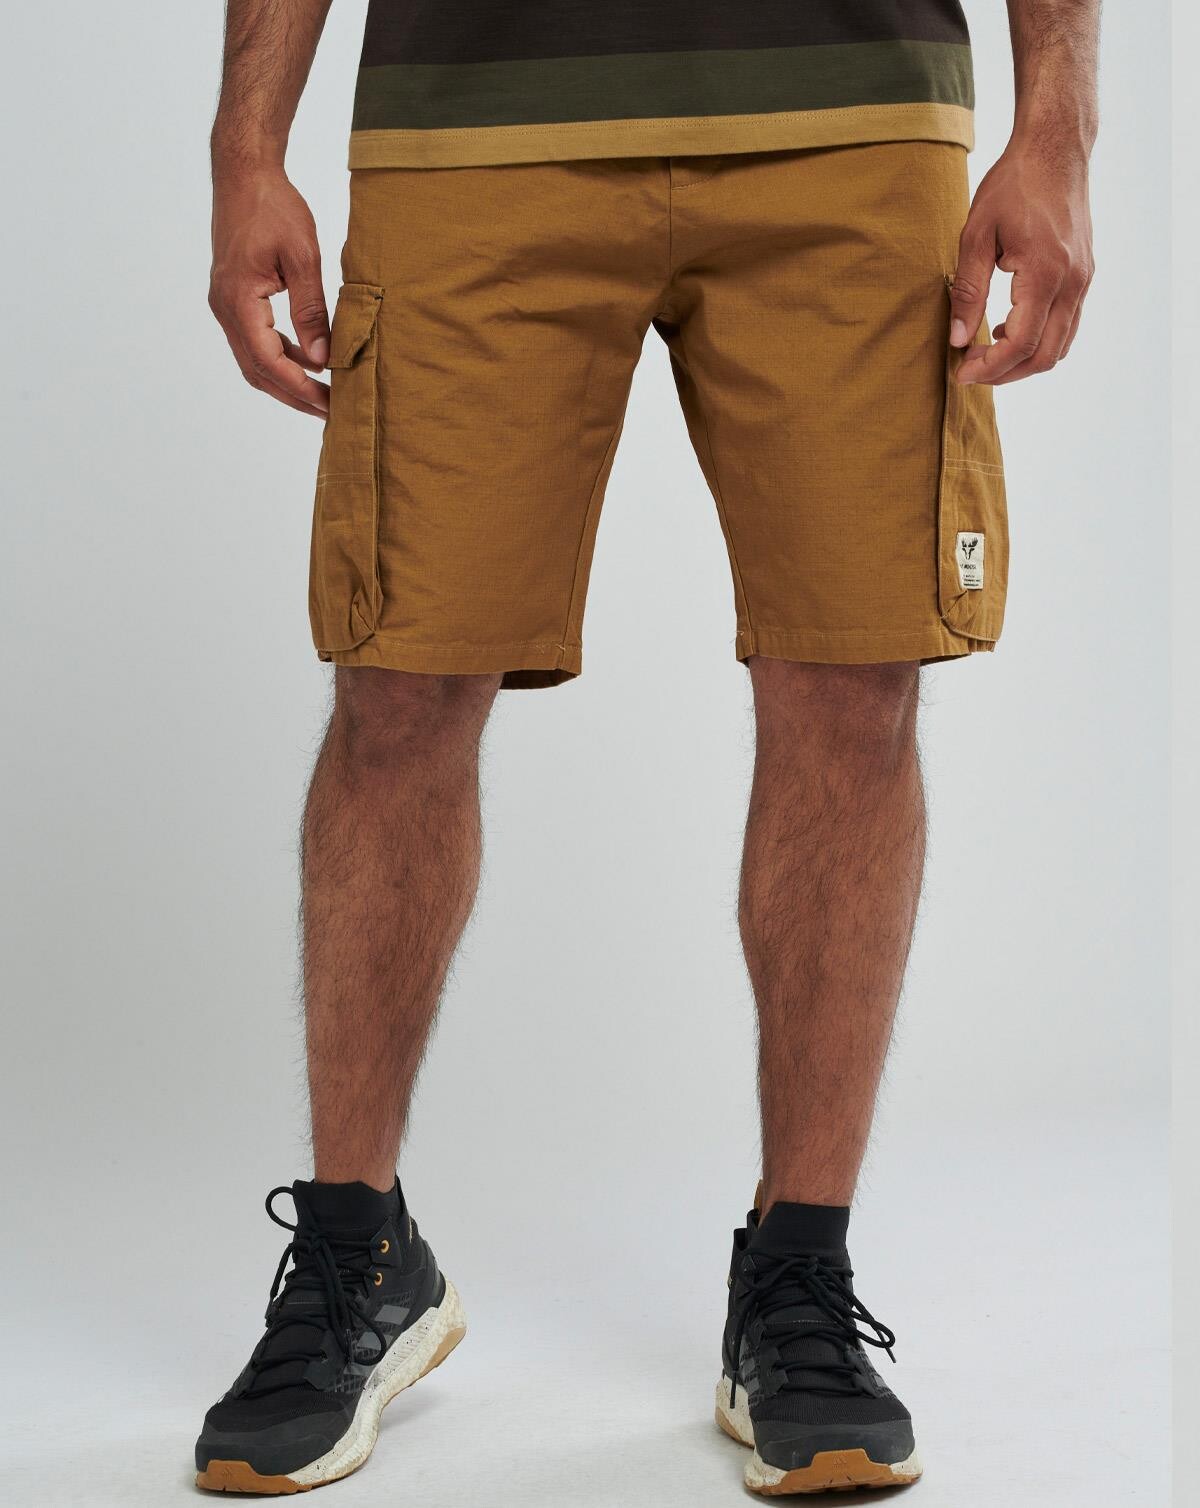 #3 - Fat Moose Tap Cargo Shorts (Khaki, S)